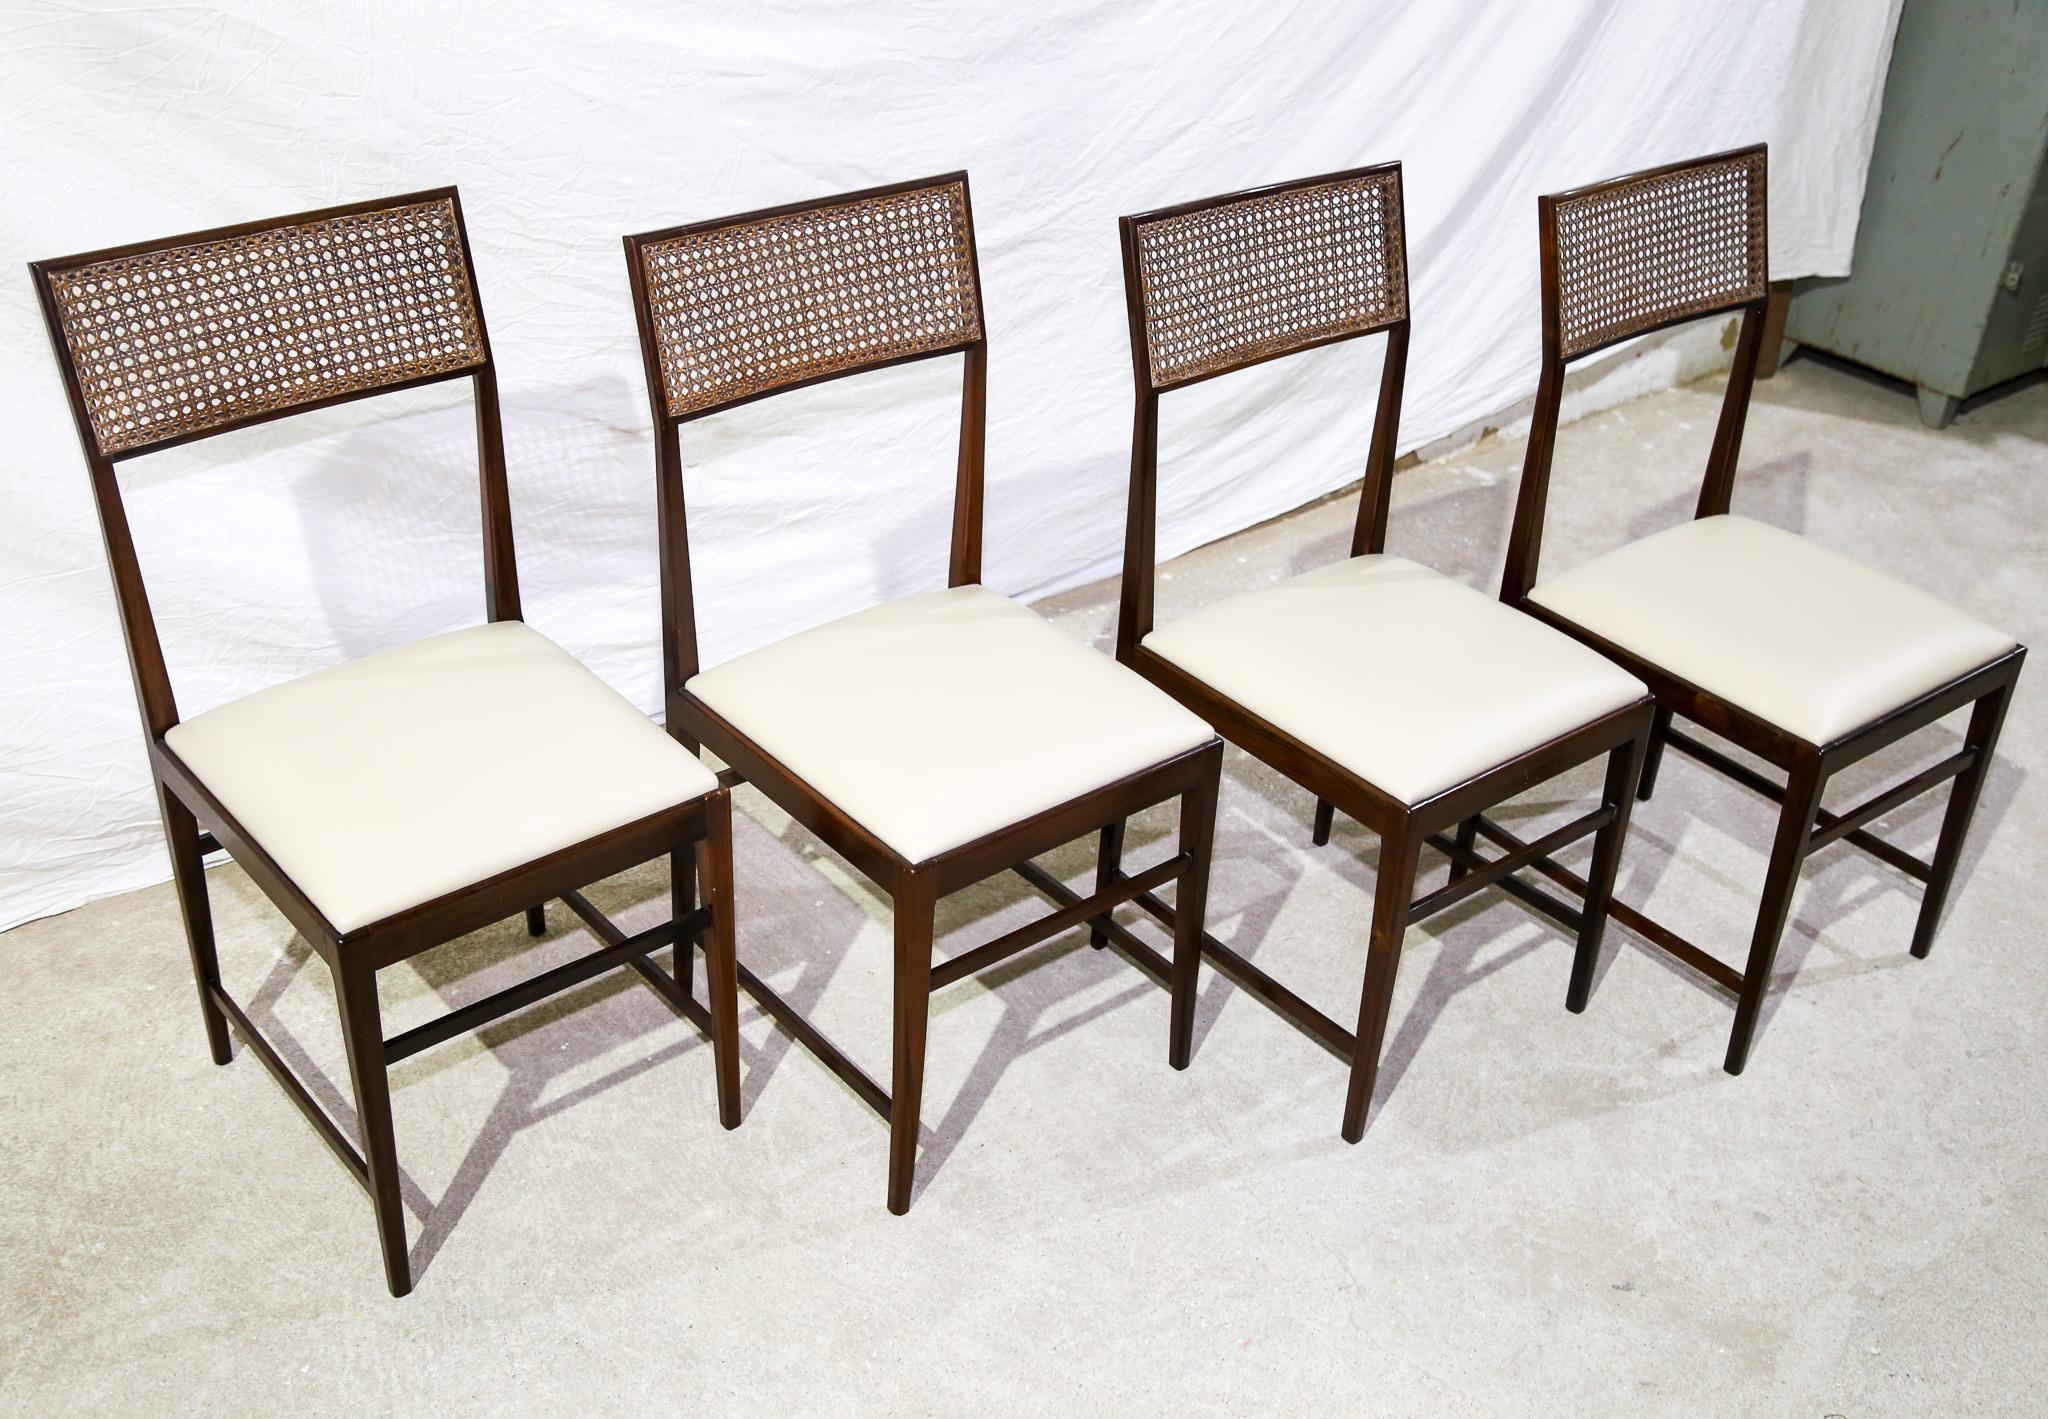 Brazilian Modern 4 Chair Set in Hardwood, Cane, Leather, Joaquim Tenreiro 1950s For Sale 1